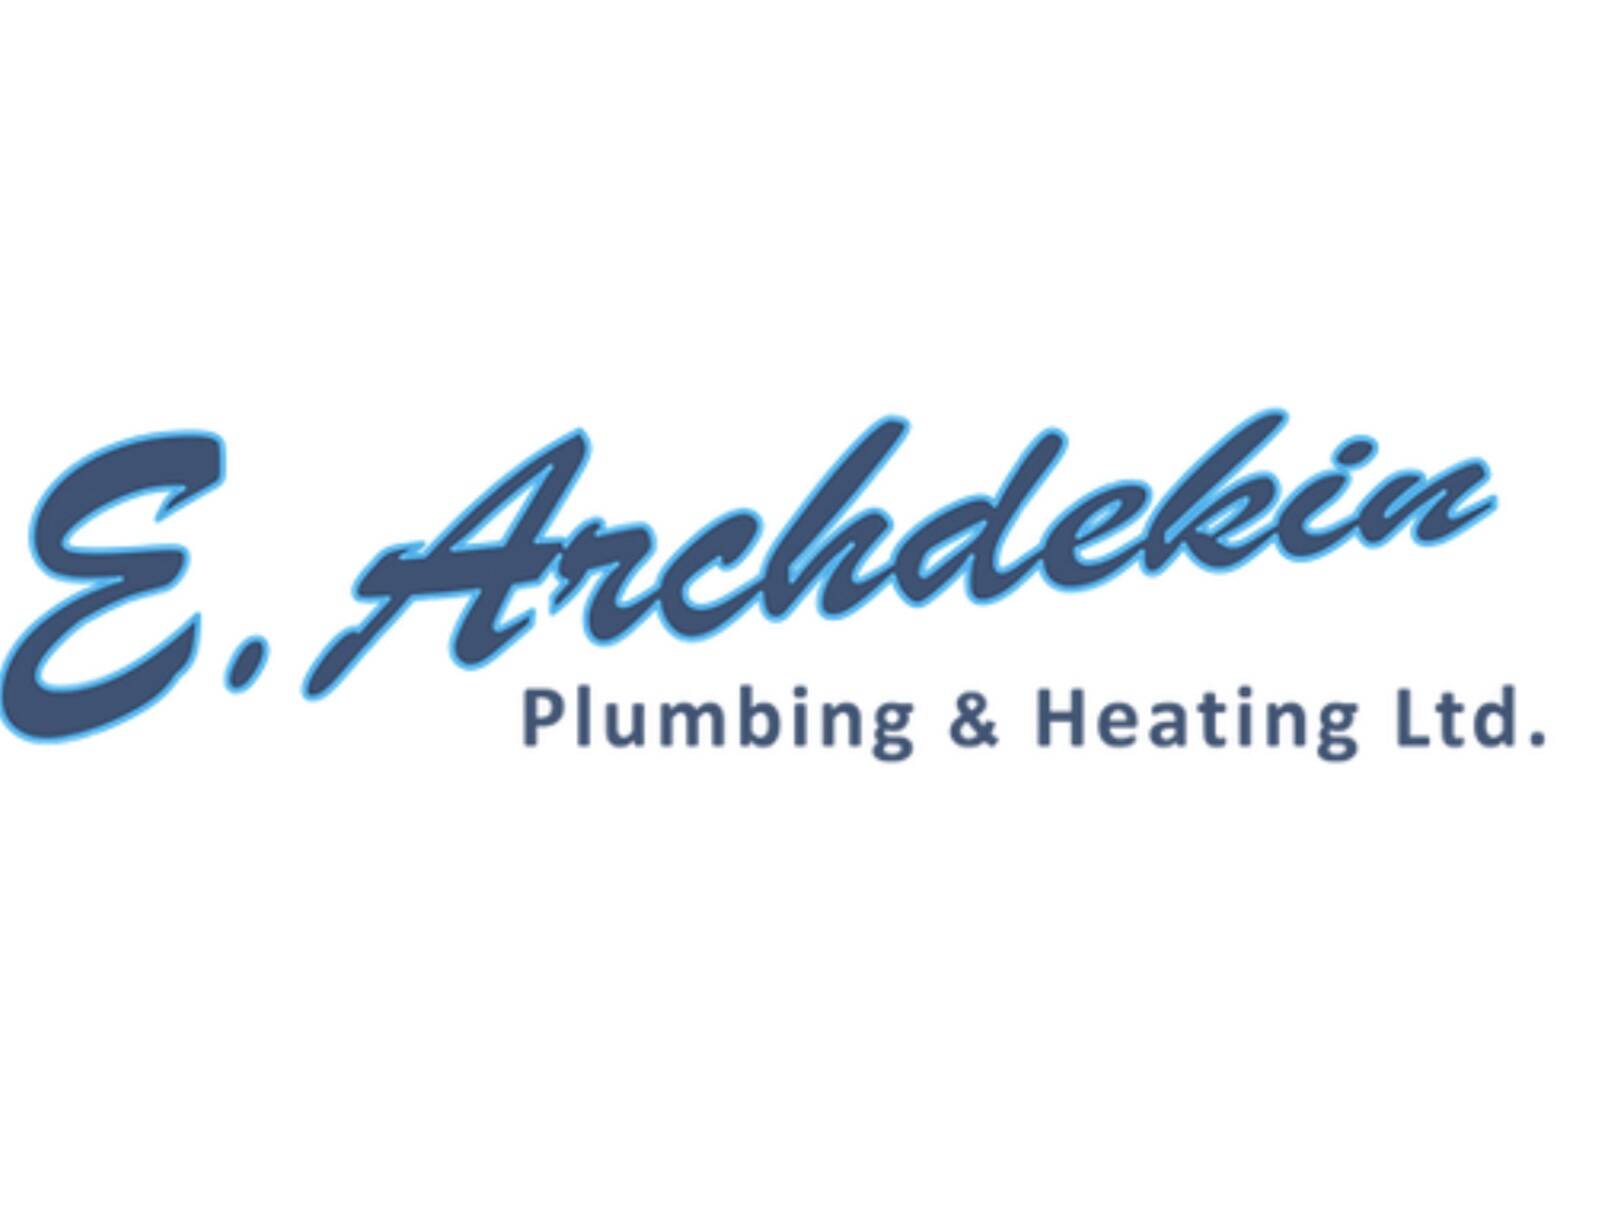 E. Archdekin Plumbing and Heating